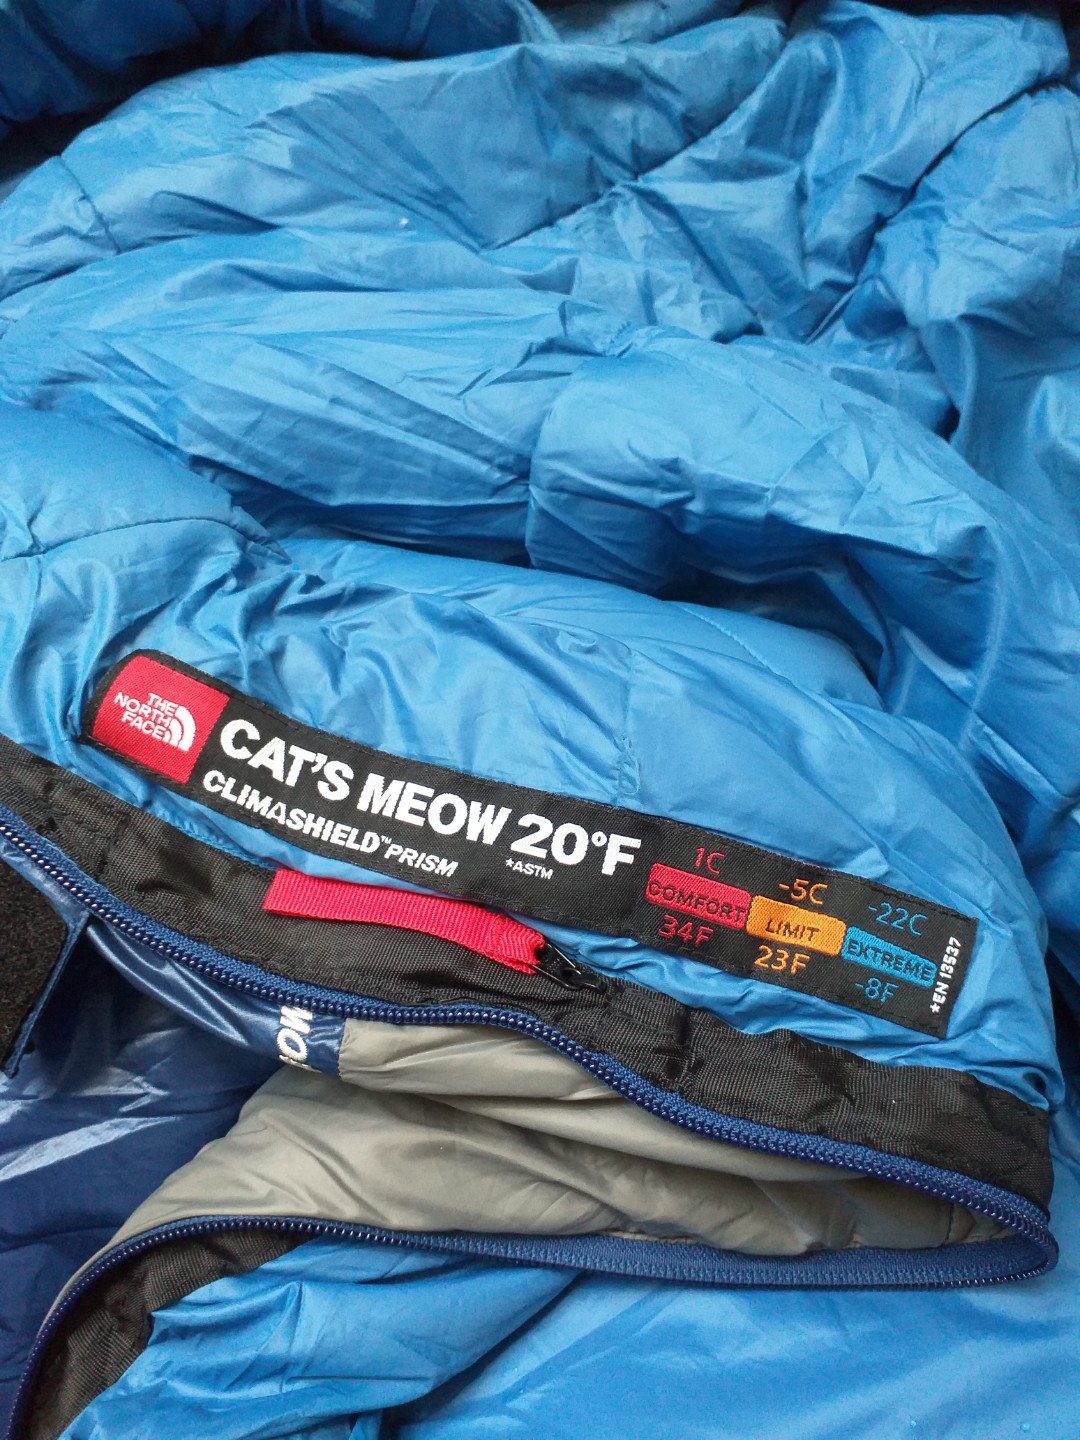 tnf cat's meow sleeping bag